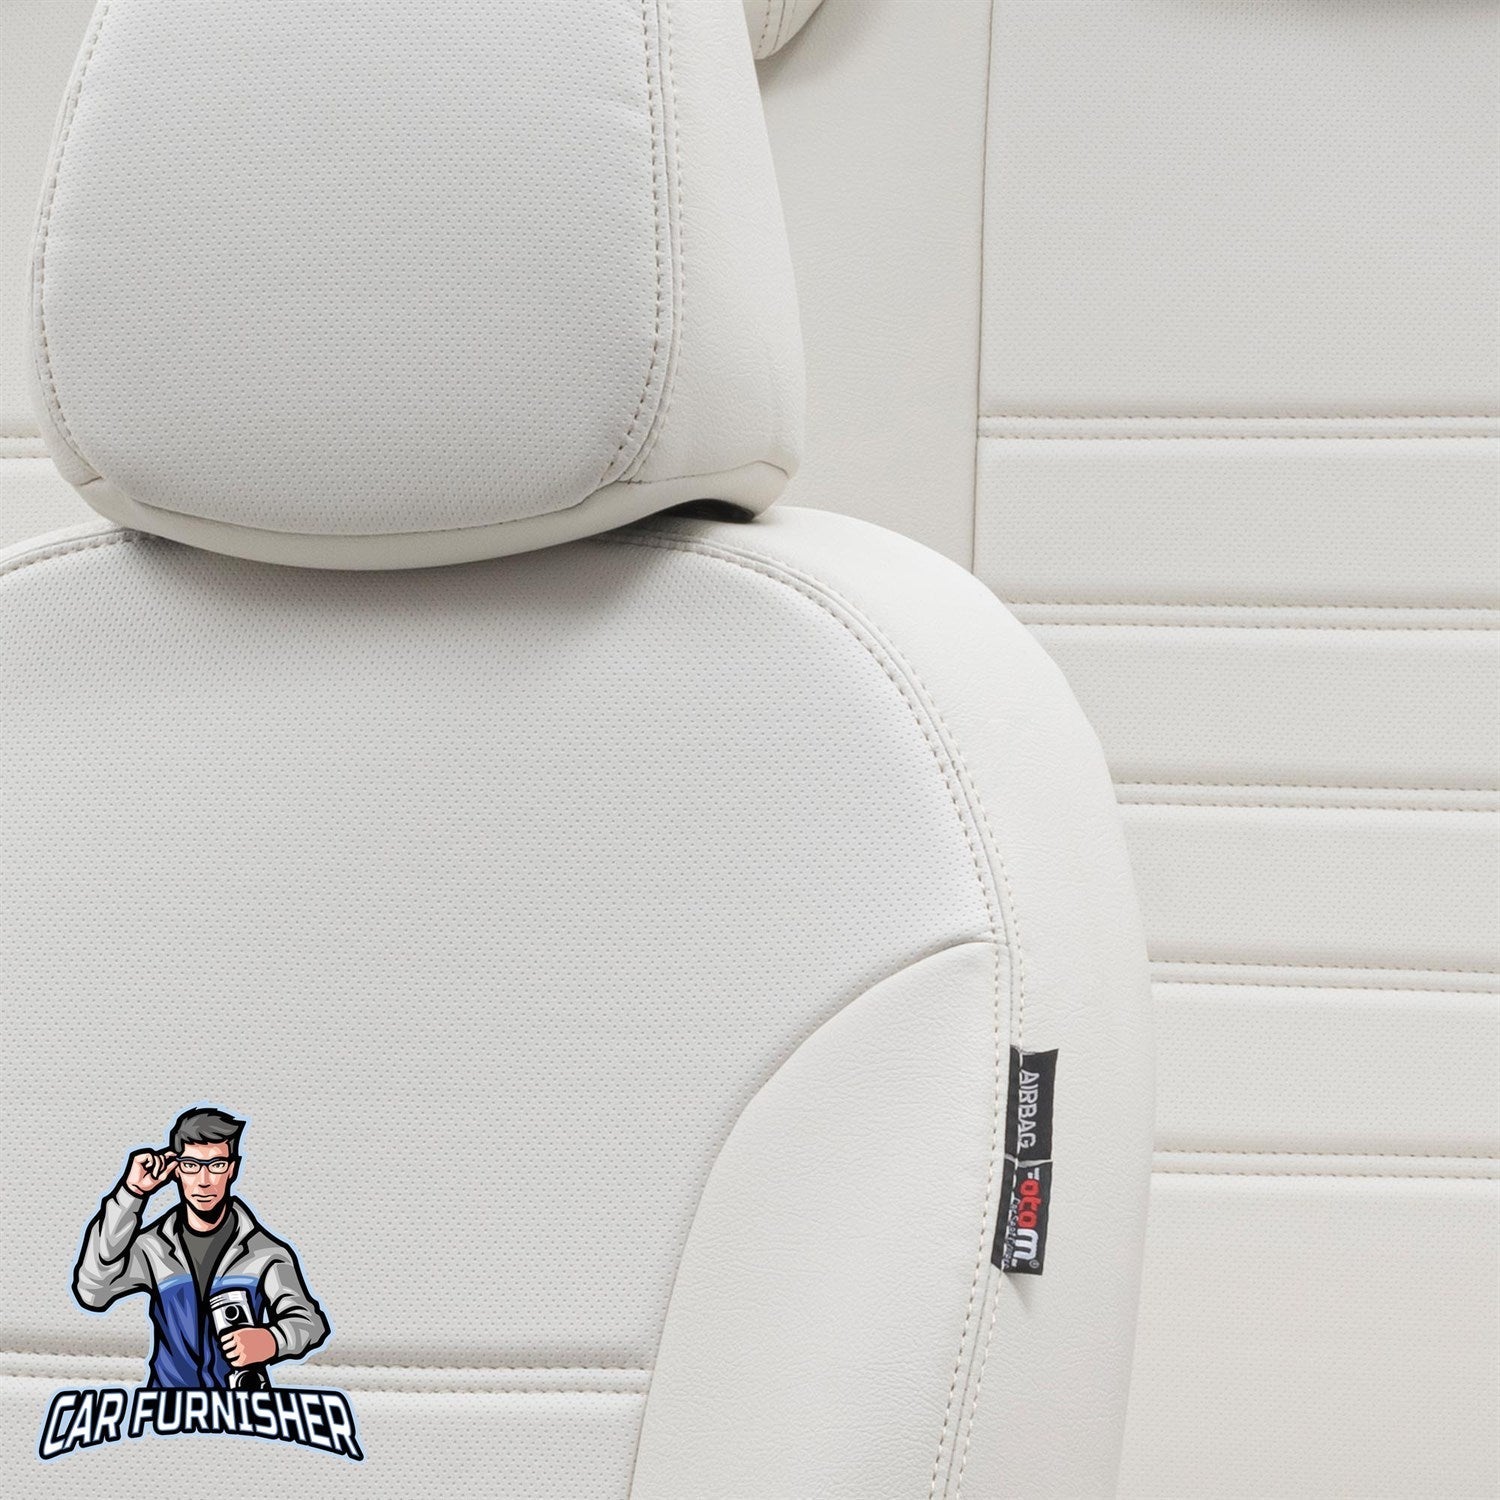 Skoda Yeti Seat Covers Istanbul Leather Design Ivory Leather